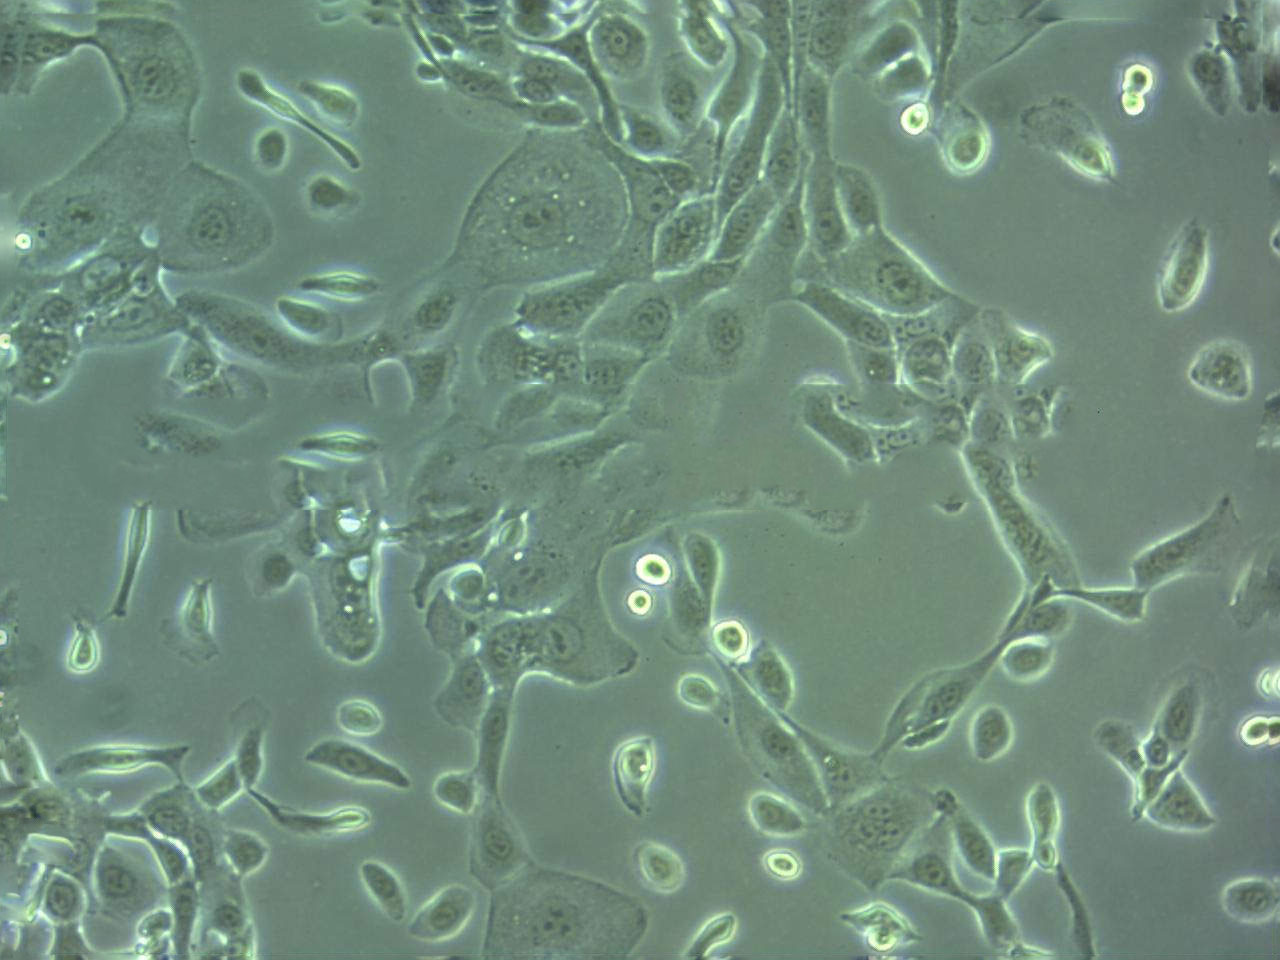 C32 [Human melanoma] Cell|人黑色素瘤细胞,C32 [Human melanoma] Cell